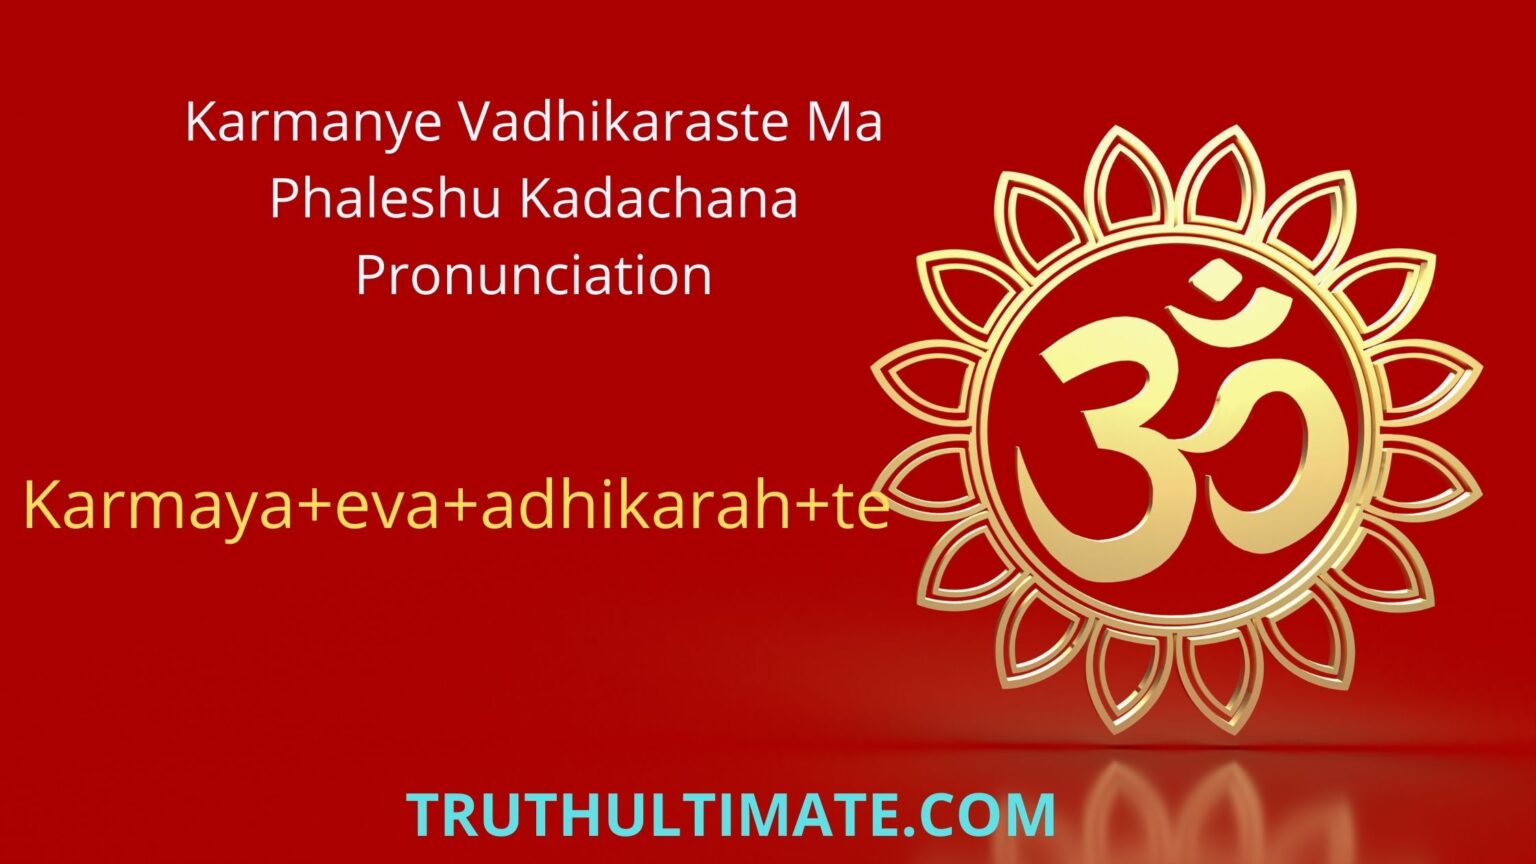 Karmanye Vadhikaraste Ma Phaleshu Kadachana Truth Ultimate